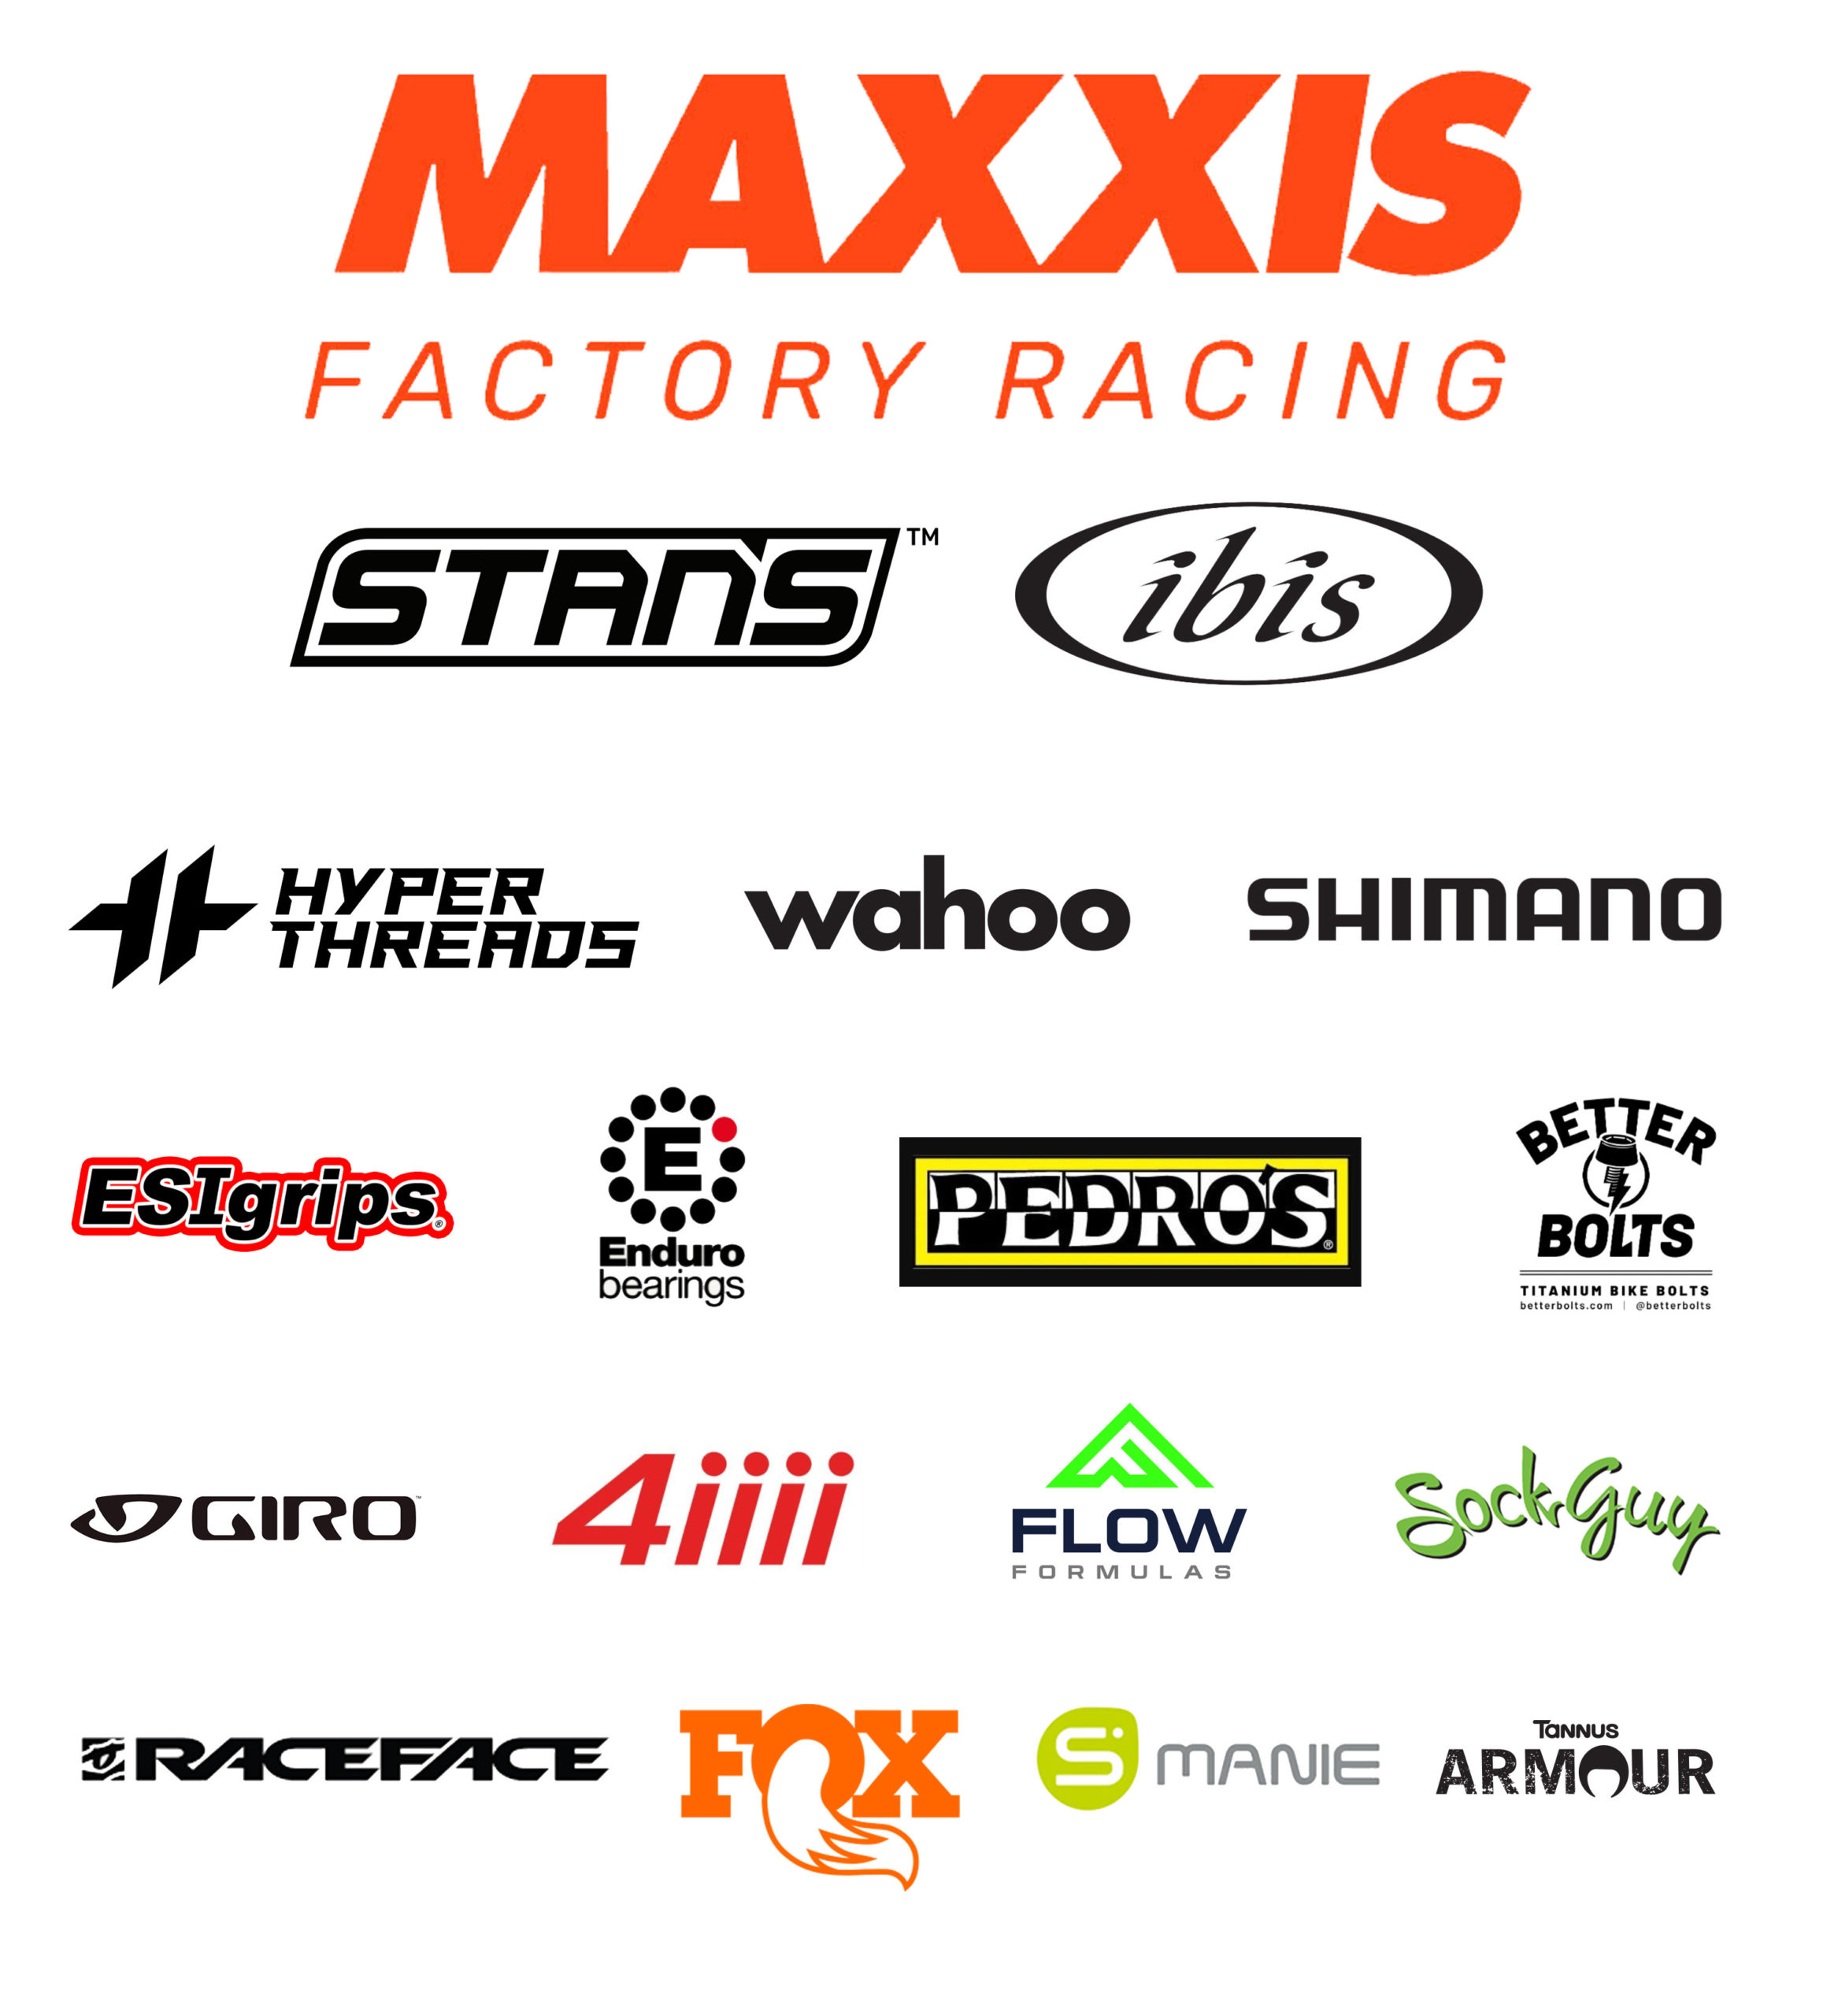 Maxxis Factory Racing sponsors list